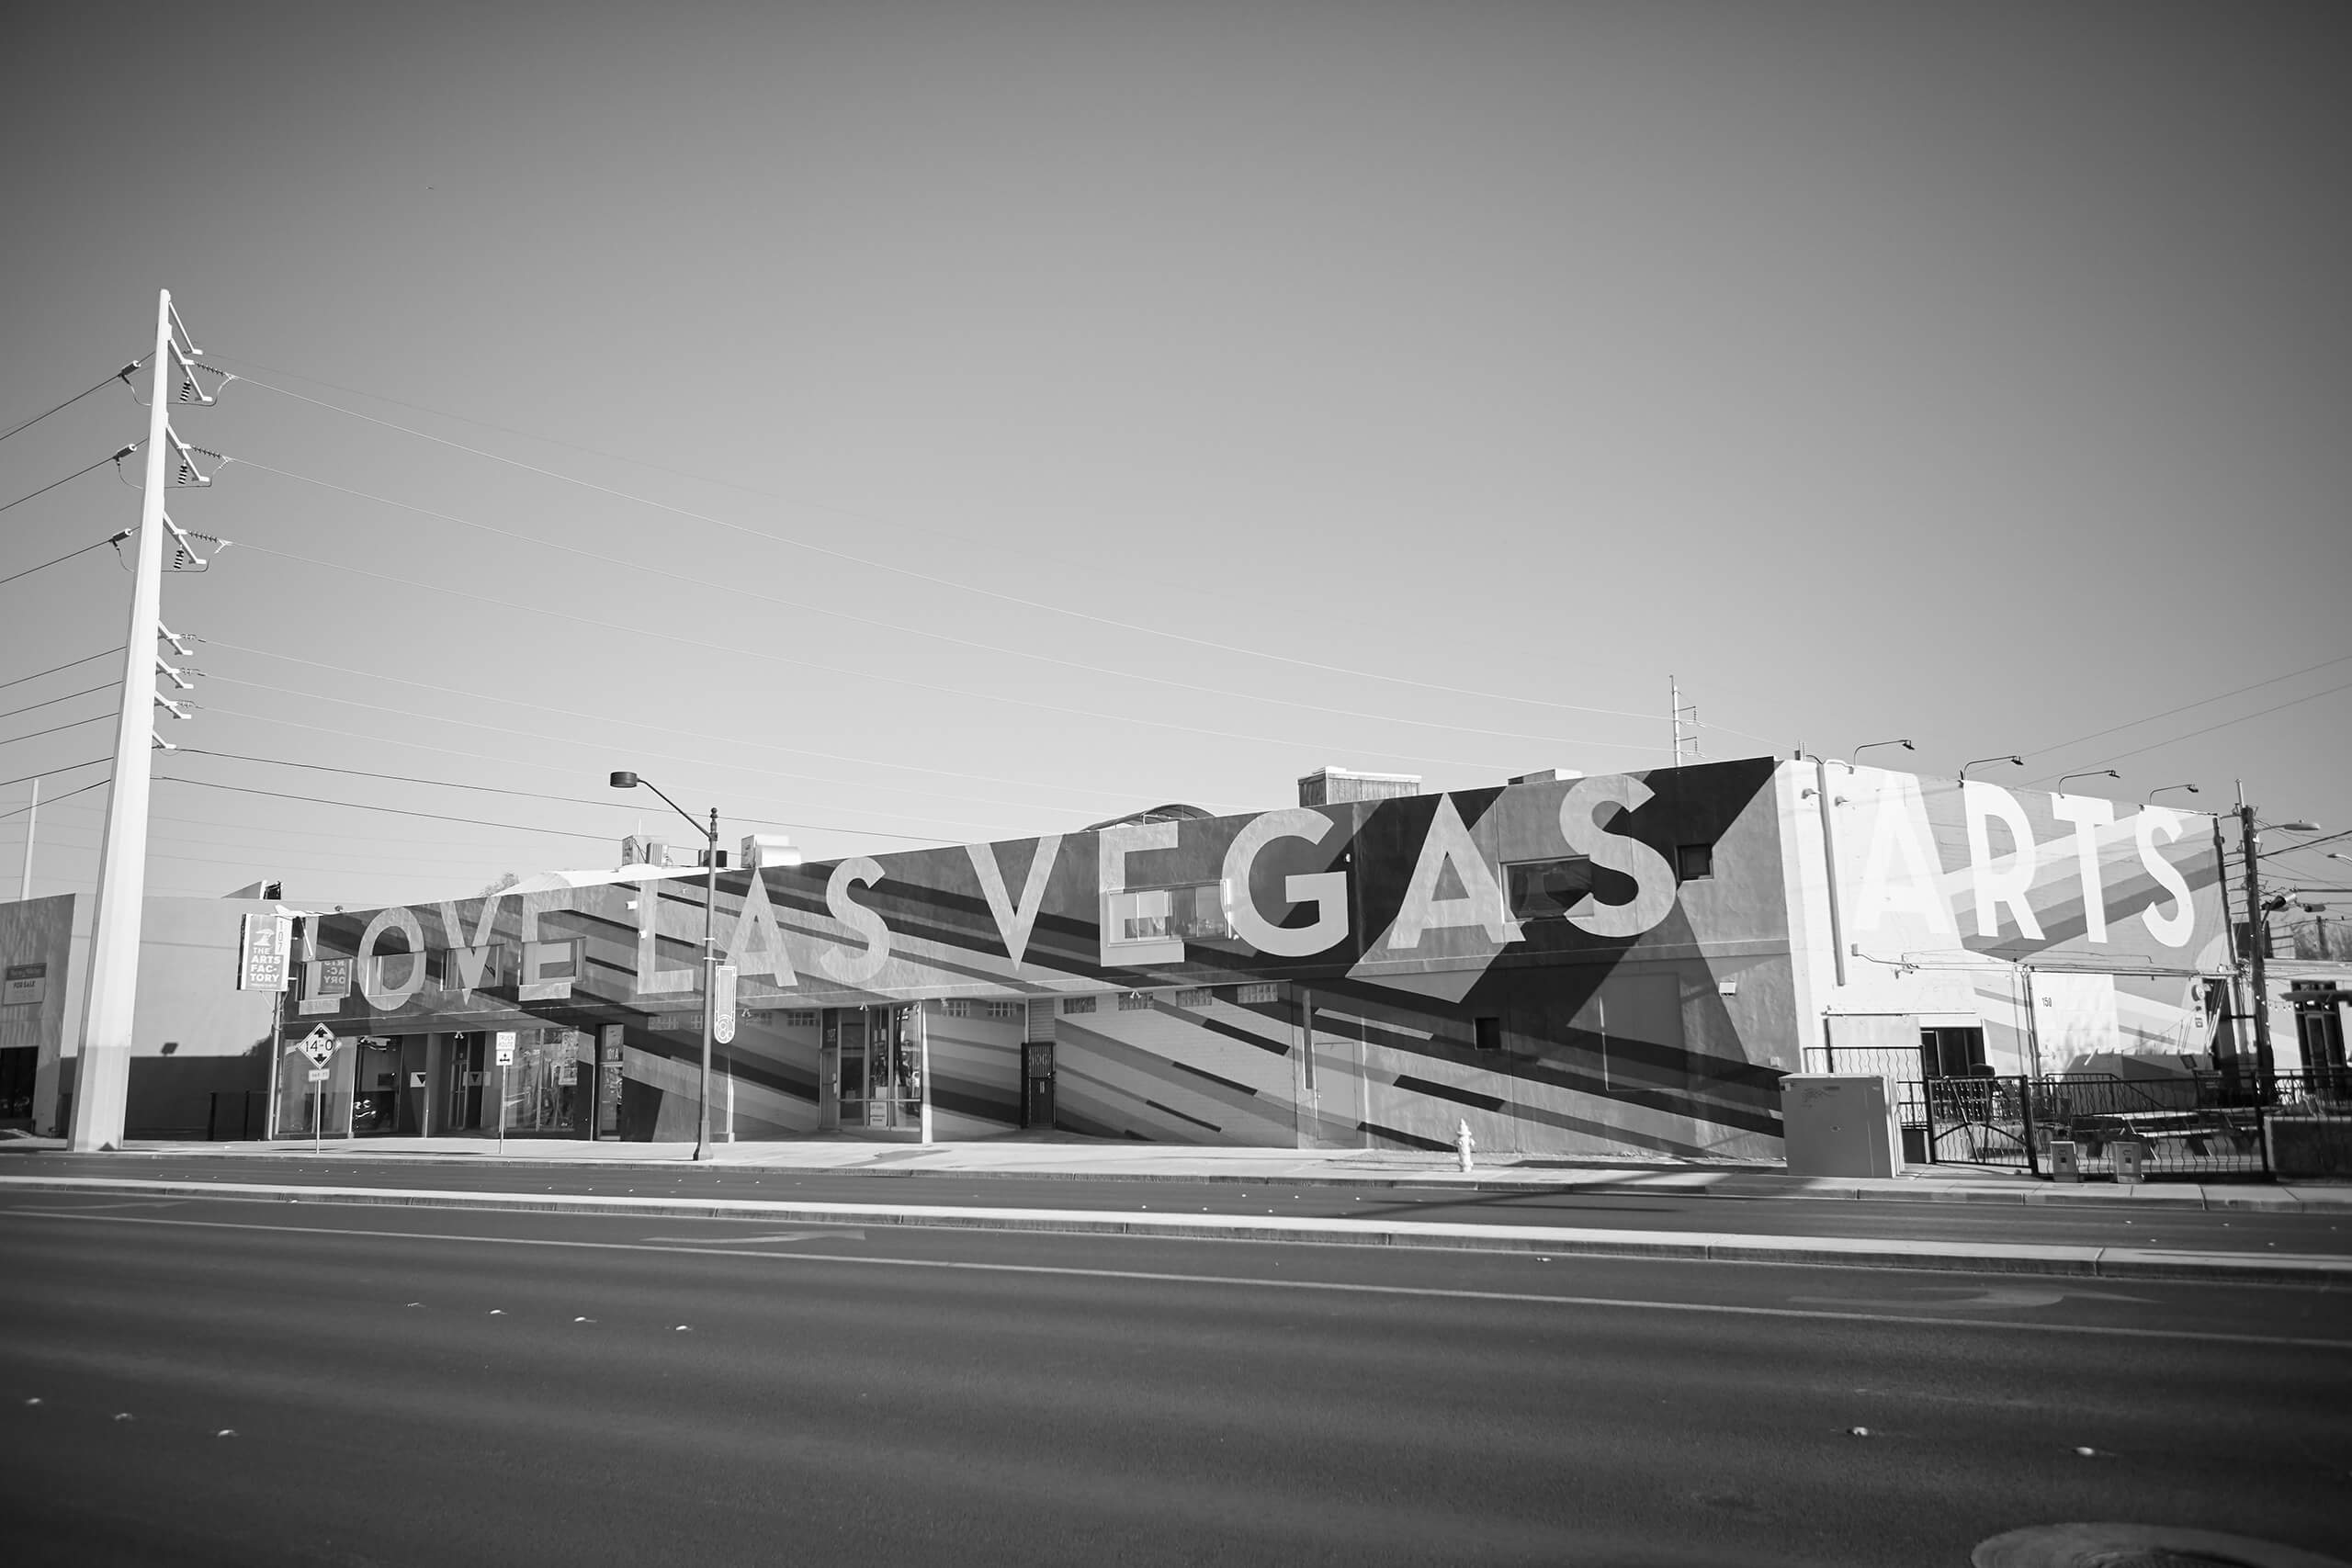 "Love Las Vegas" - Mural, Dowtown Las Vegas